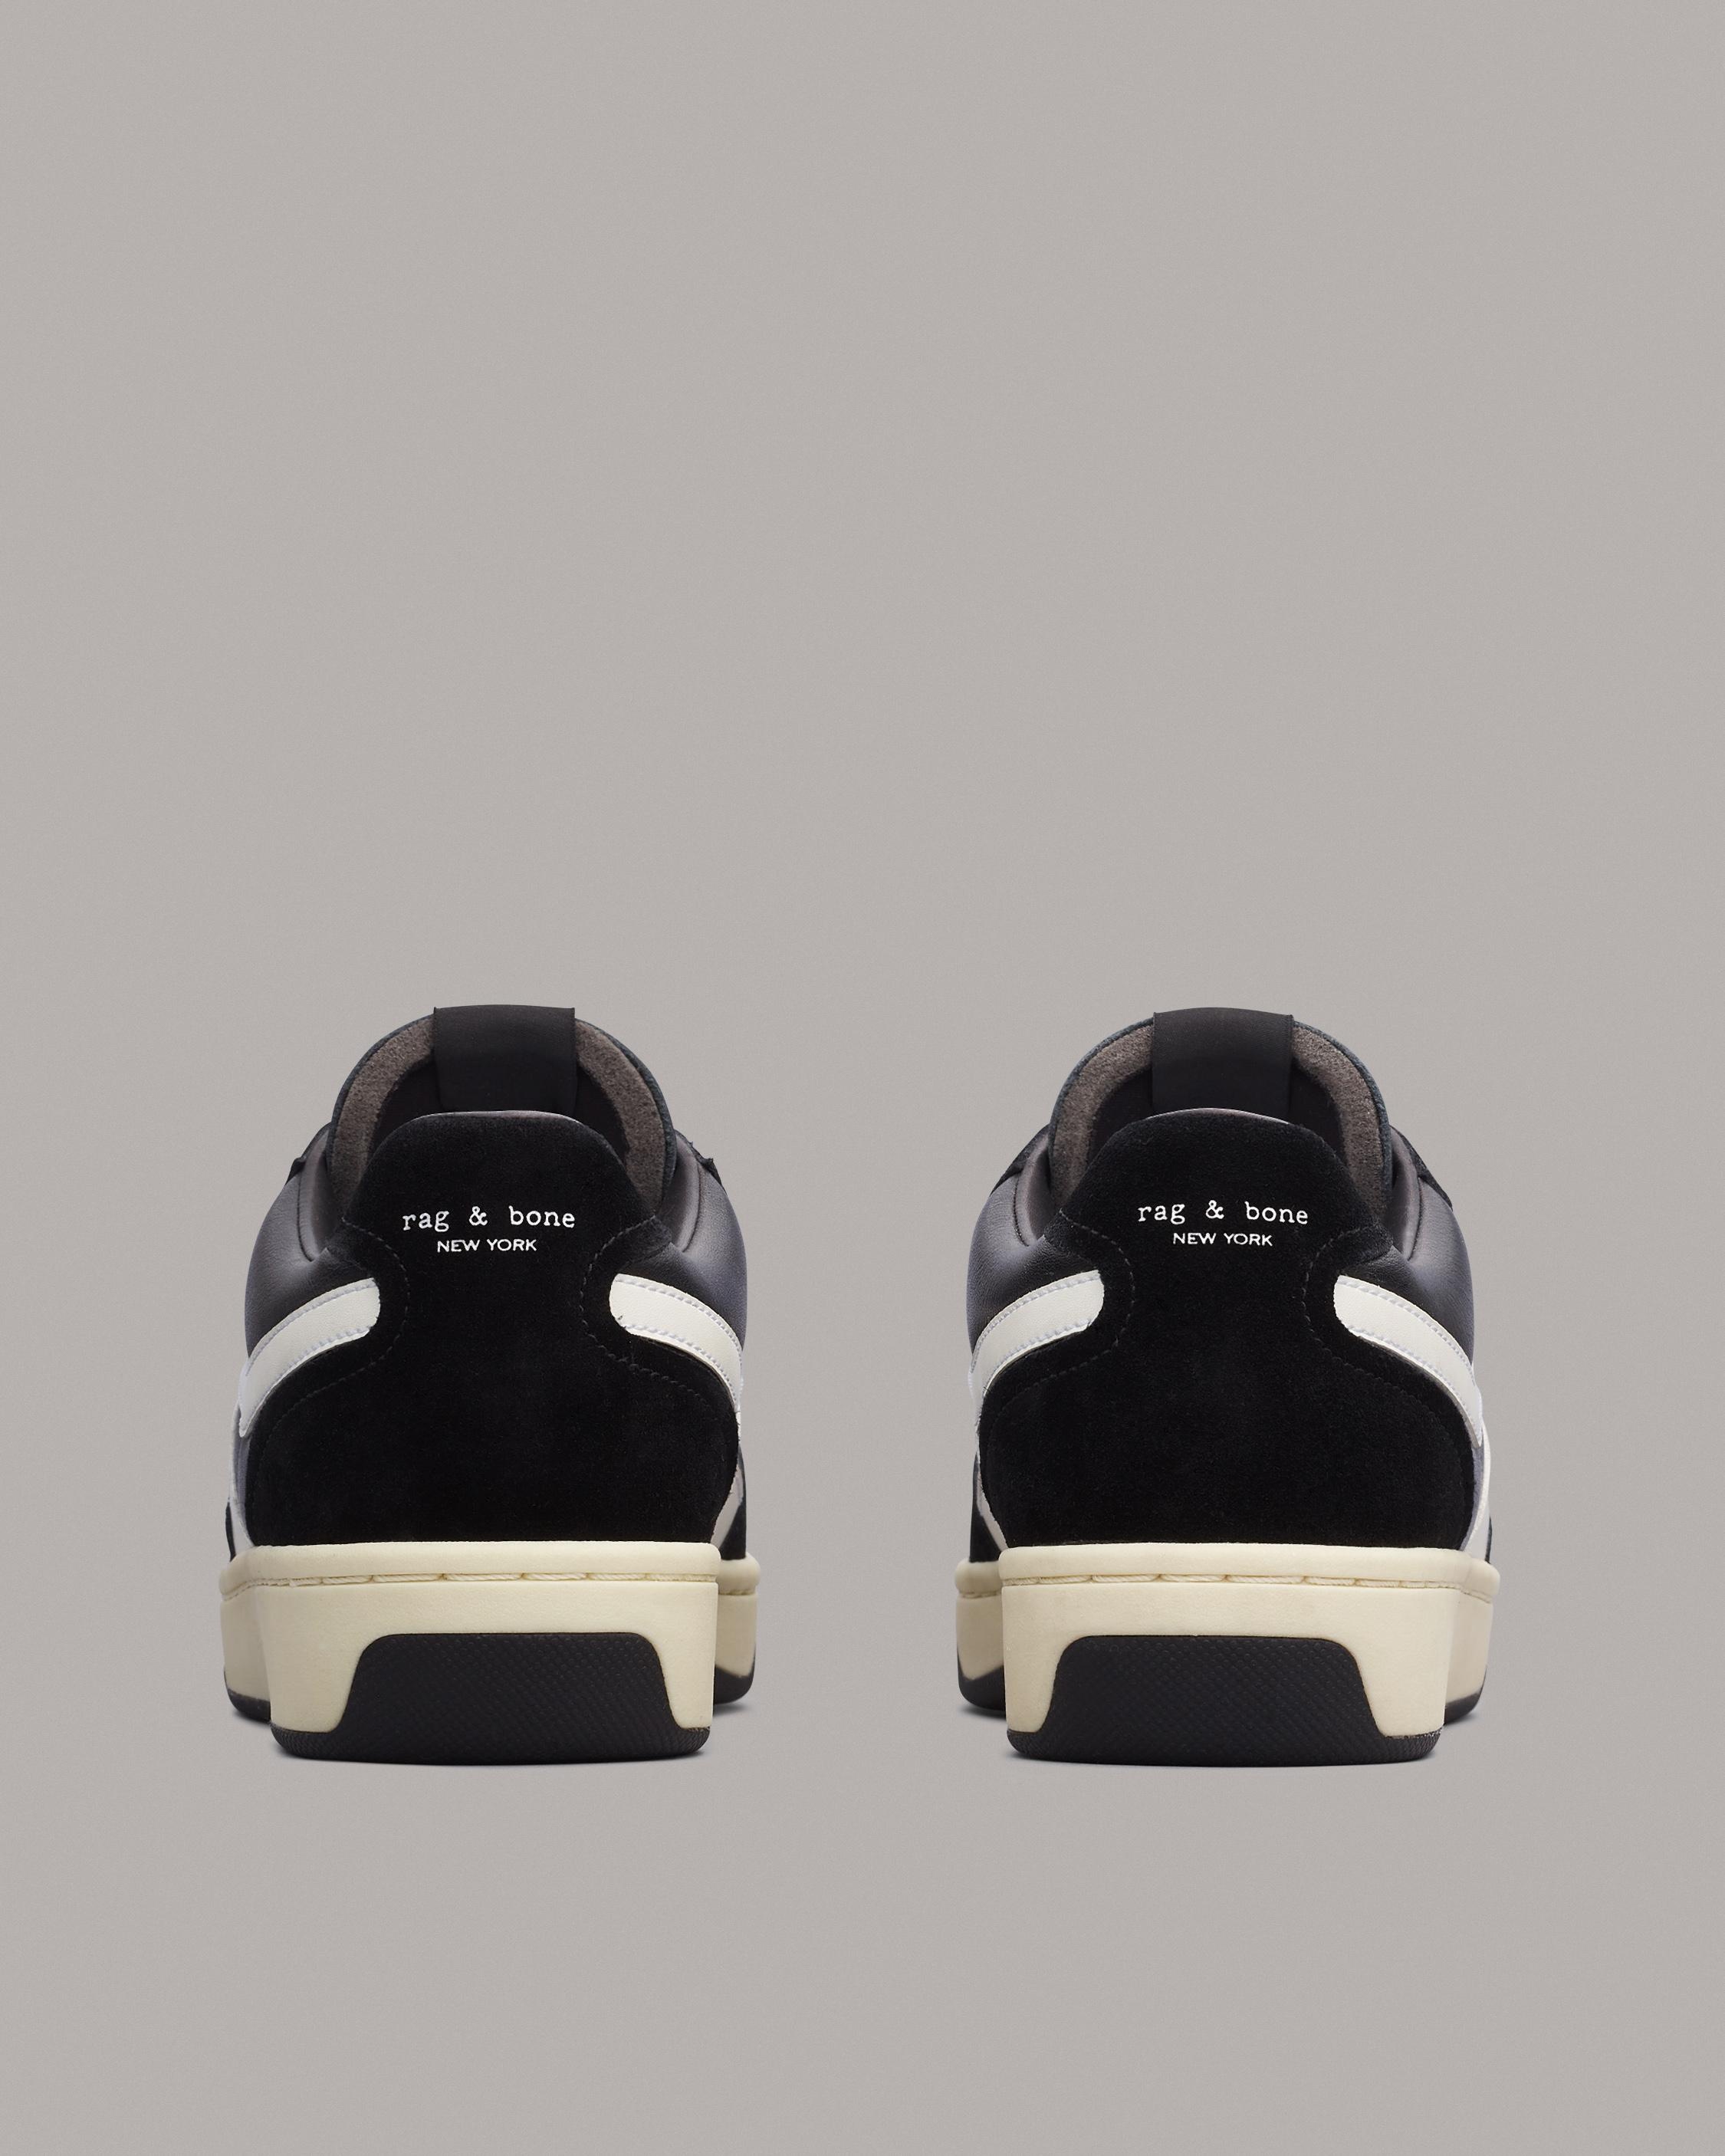 Retro Court Sneaker - Leather
Low Top Sneaker - 4